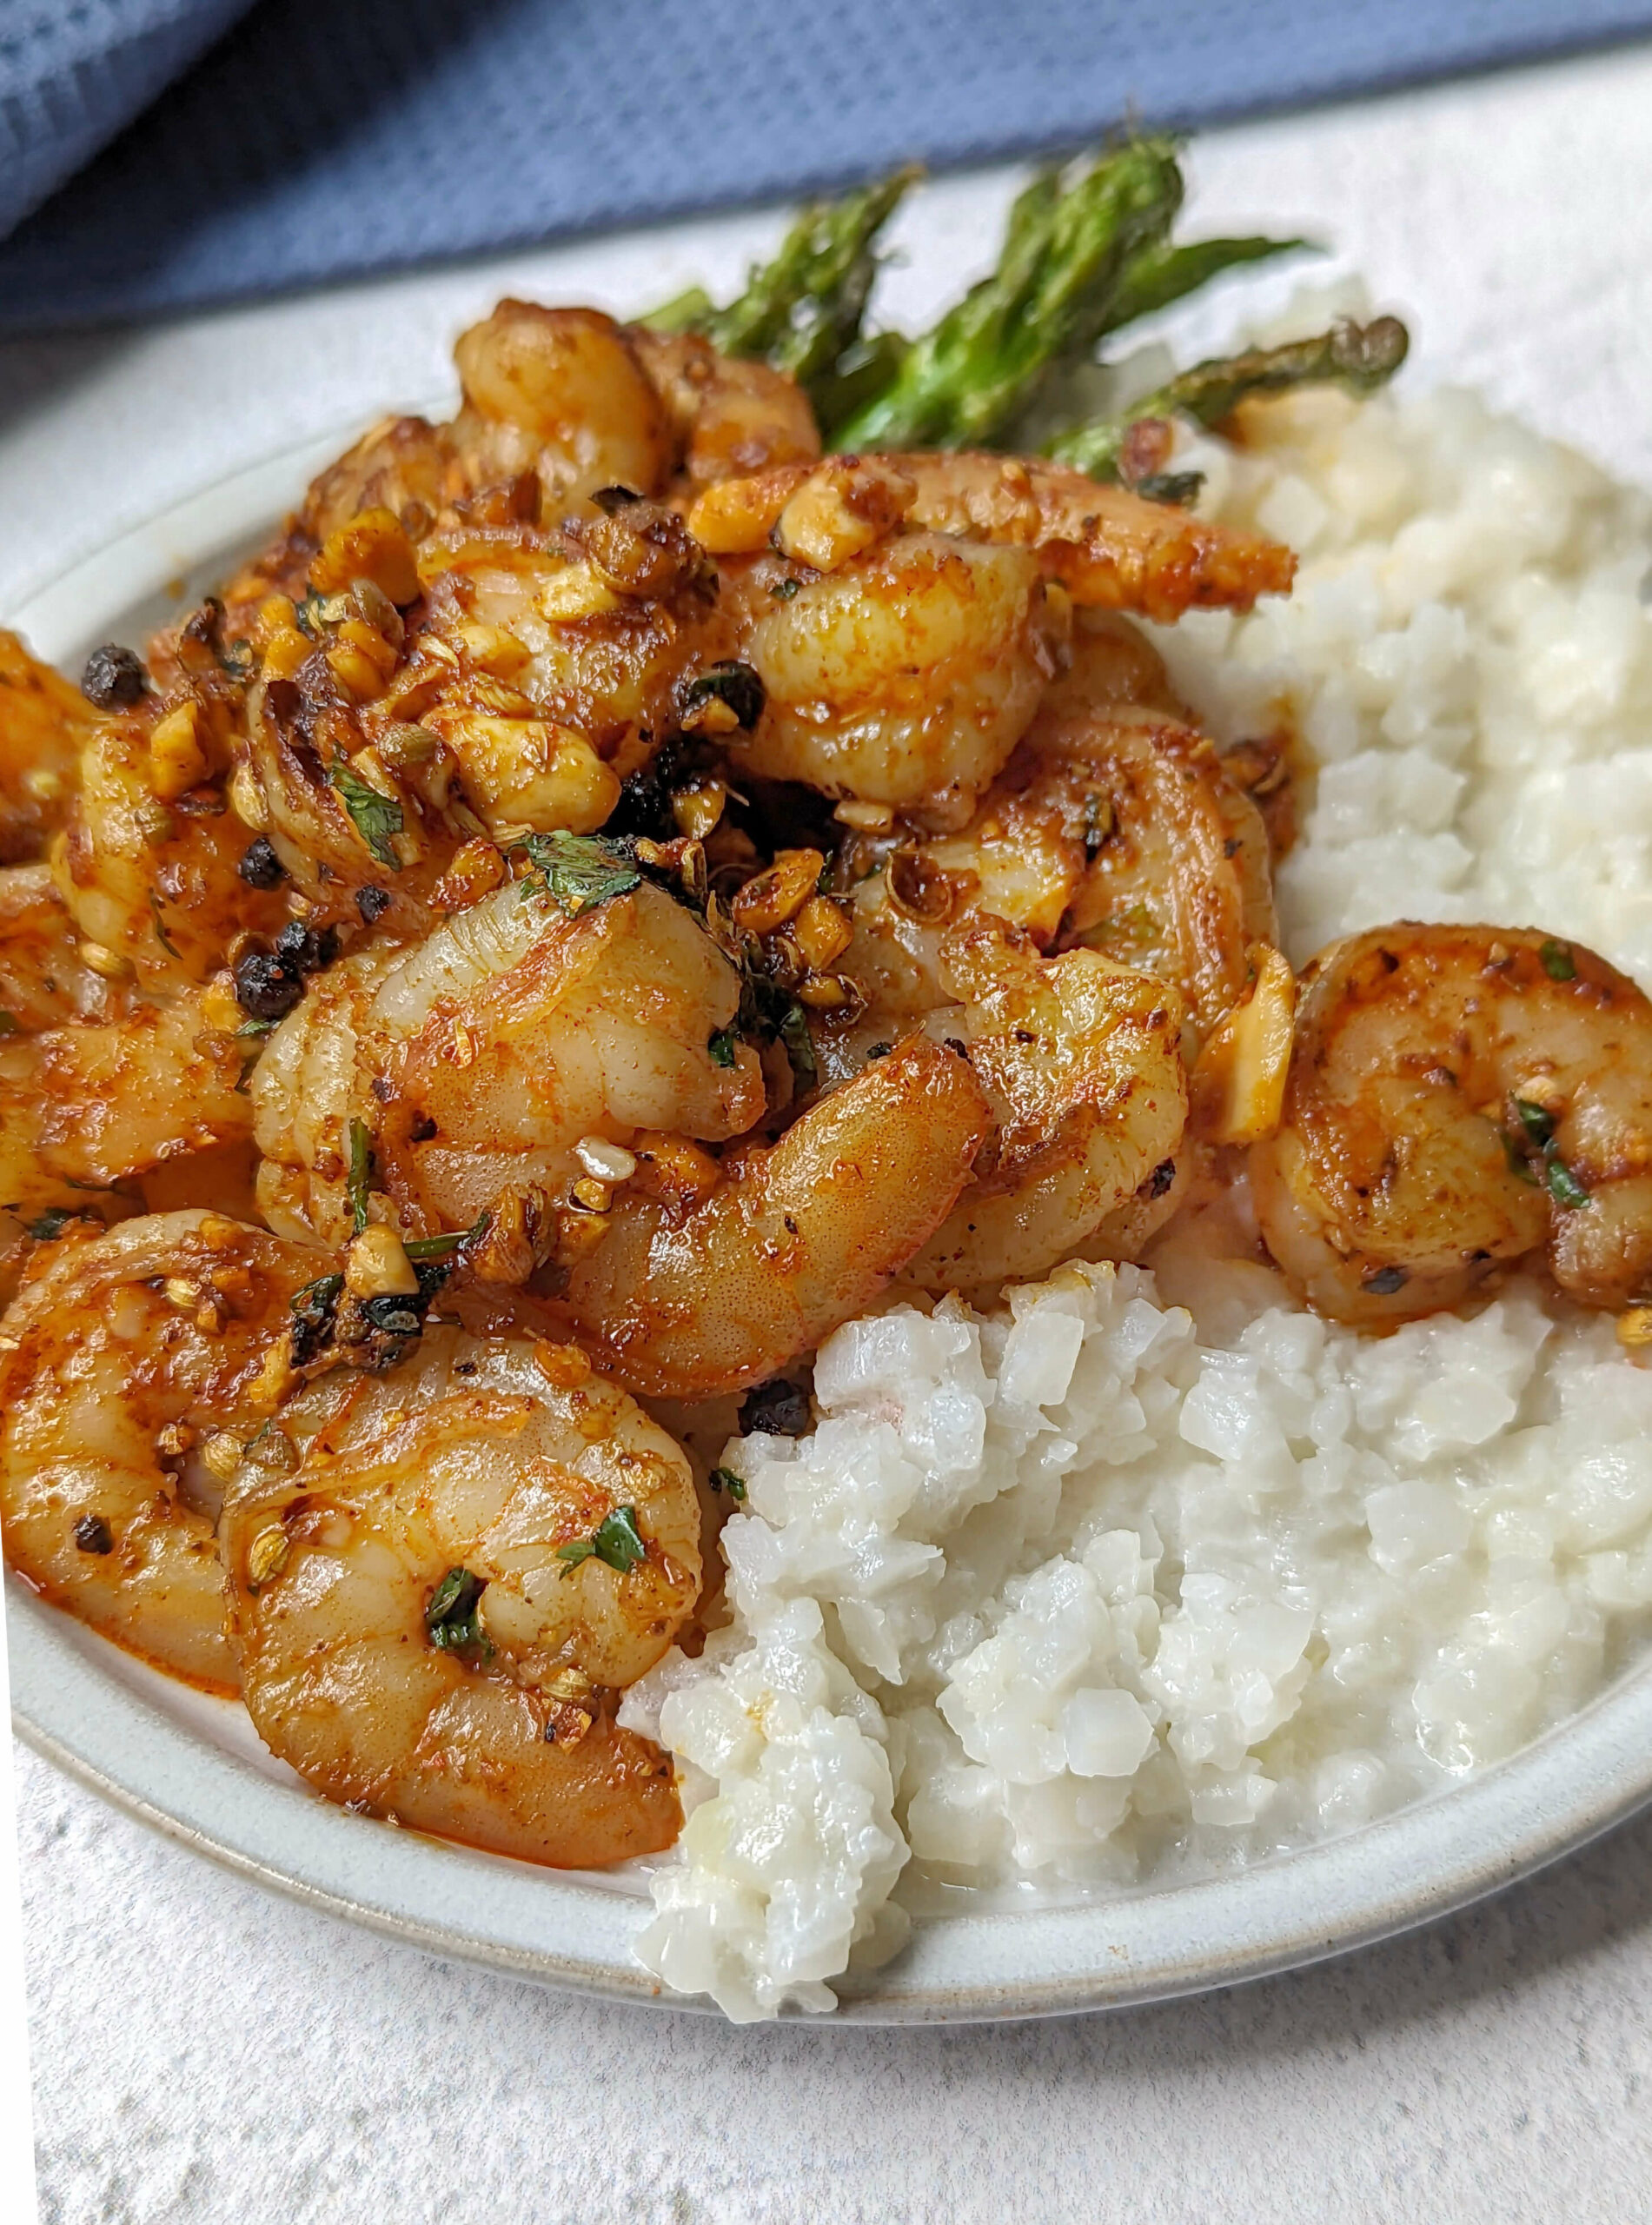 Pan seared shrimp on a plate with cauliflower rice and asparagus.